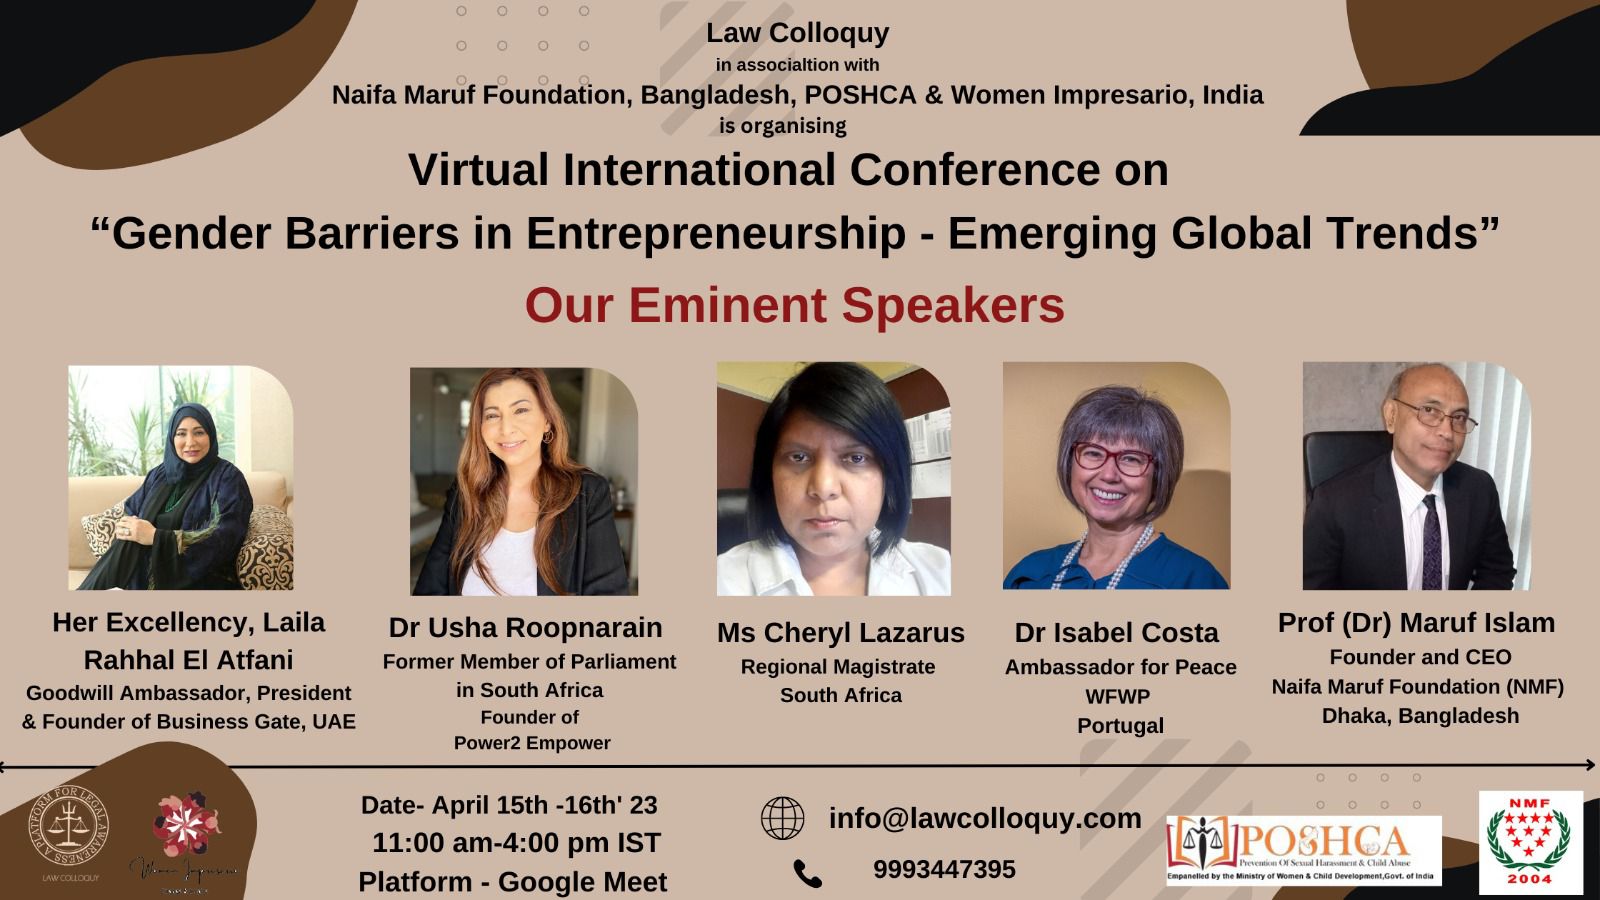 Virtual International Conference on “Gender Barriers in Entrepreneurship: Emerging Global Trends”